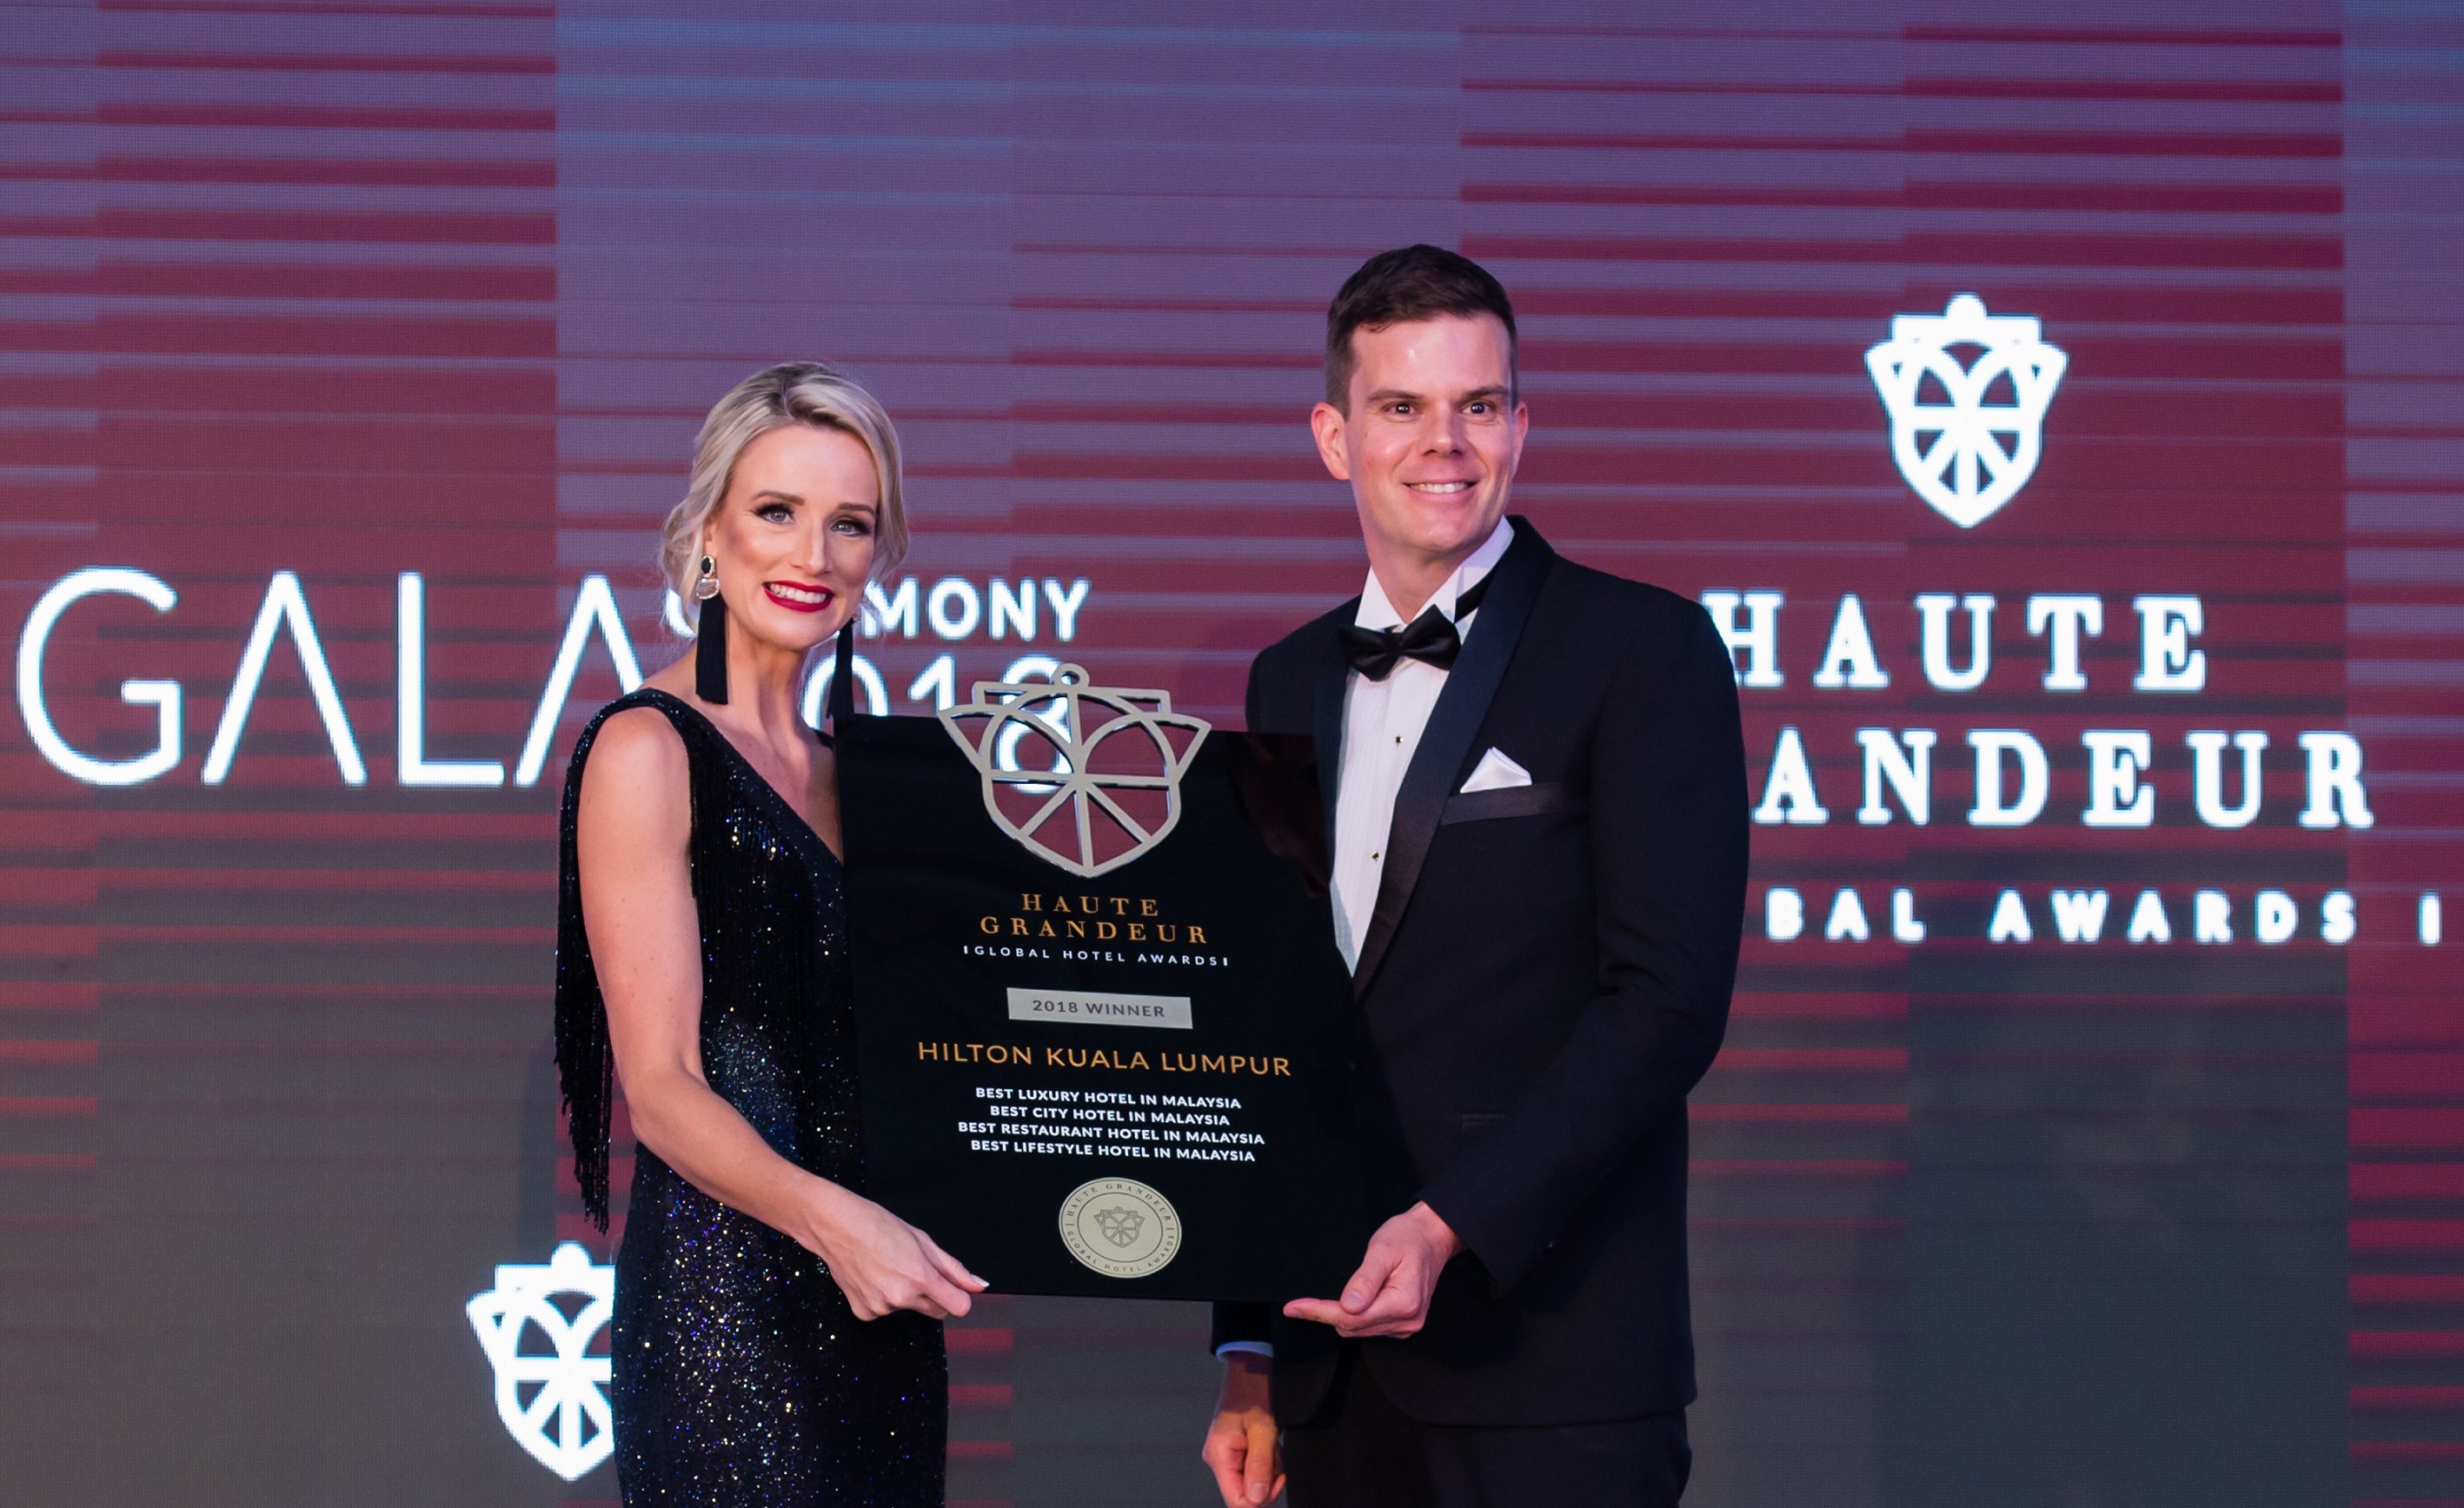 Hilton Kuala Lumpur Ends the Year with Prestigious Haute Grandeur Global Hotel Awards